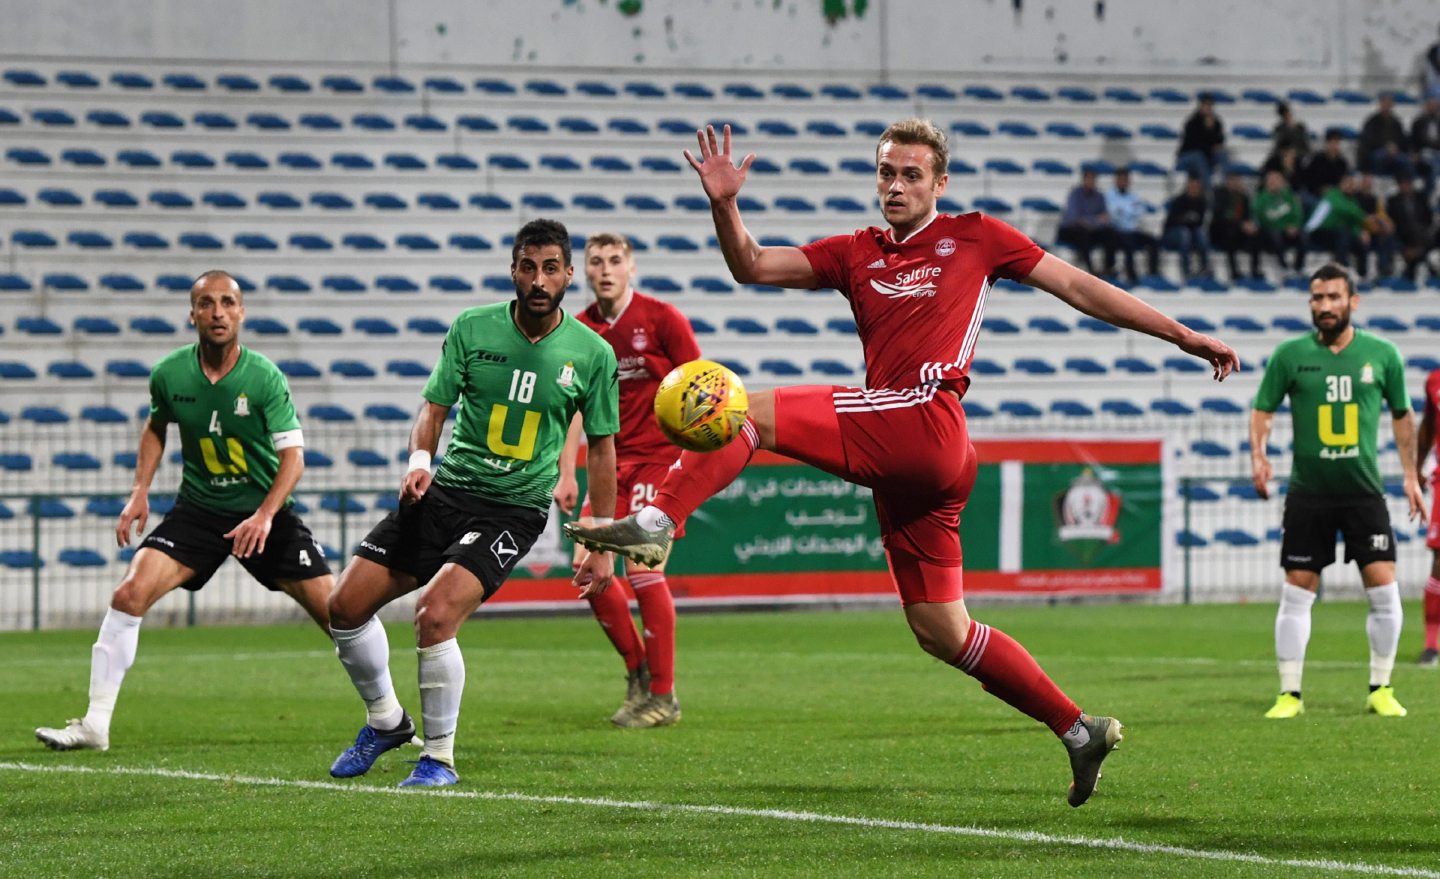 Aberdeen's James Wilson has a chance on goal during a friendly match against Al-Wehdat SC at the Maktoum bin Rashid-Al Maktoum Stadium, Dubai on January 13, 2020, in Dubai, United Arab Emirates. Image: SNS 